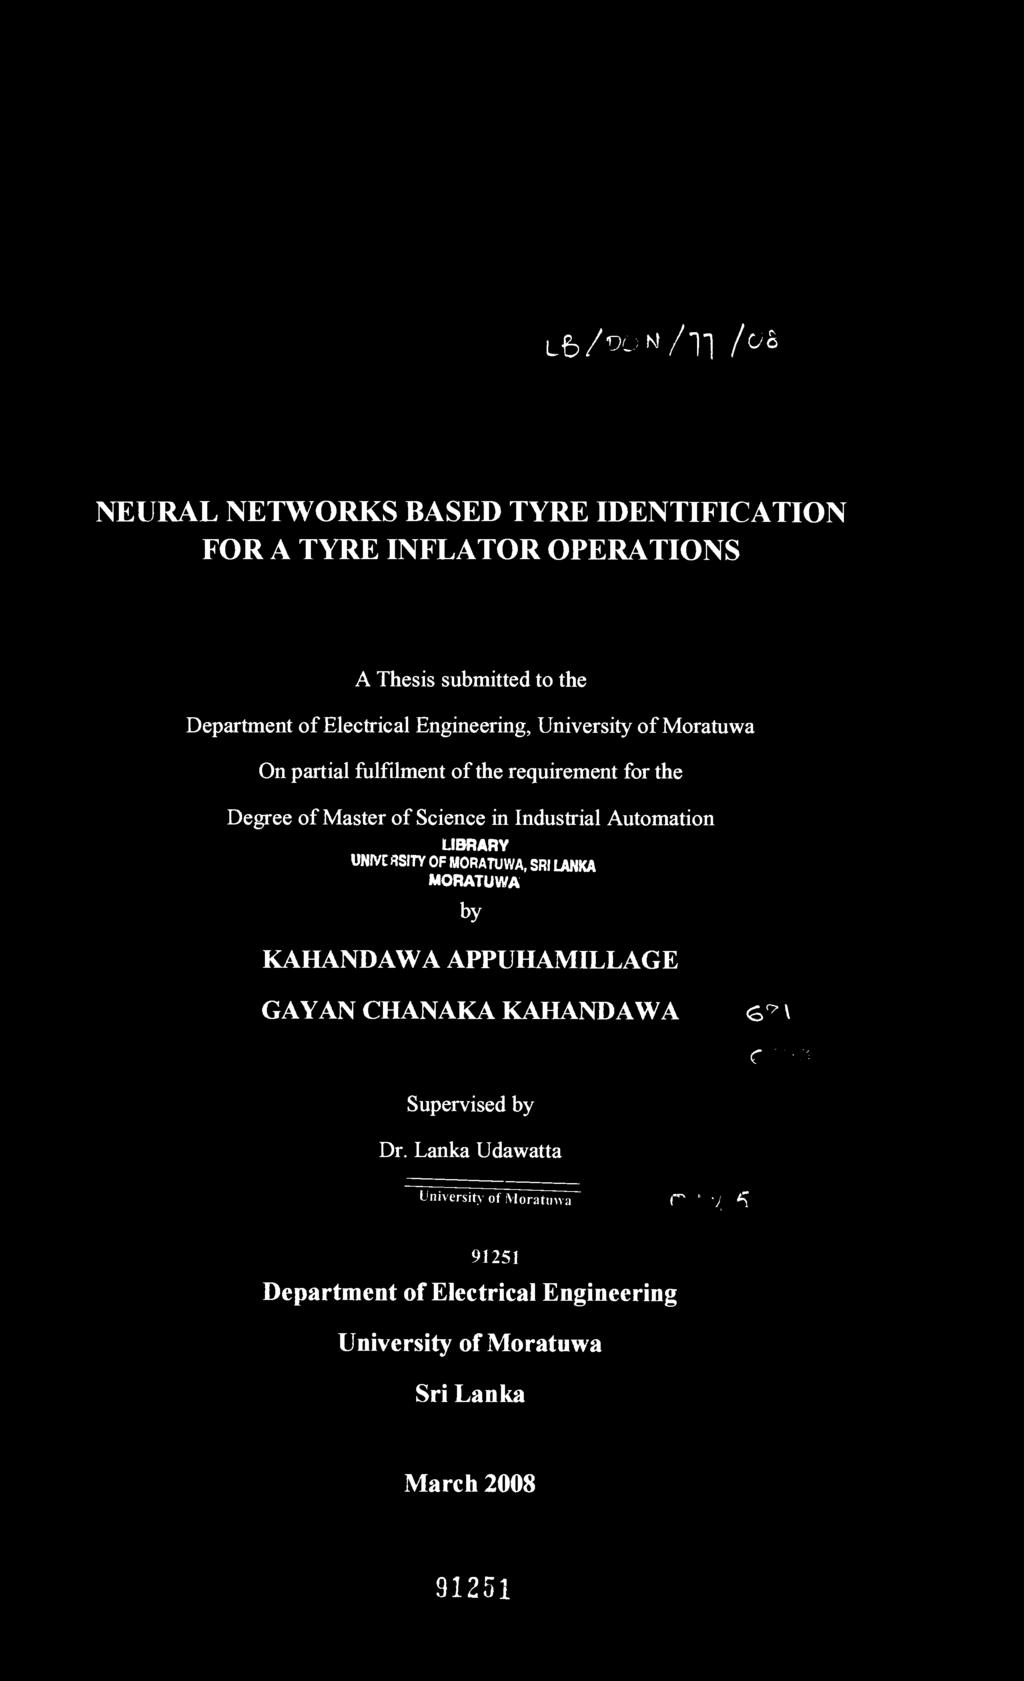 Industrial Automation LIBRARY UNIVE RSITY OF MORATUWA, SRI LANKA MORATUWA by KAHANDAWA APPUHAMILLAGE GAYAN CHANAKA KAHANDAWA <3 \